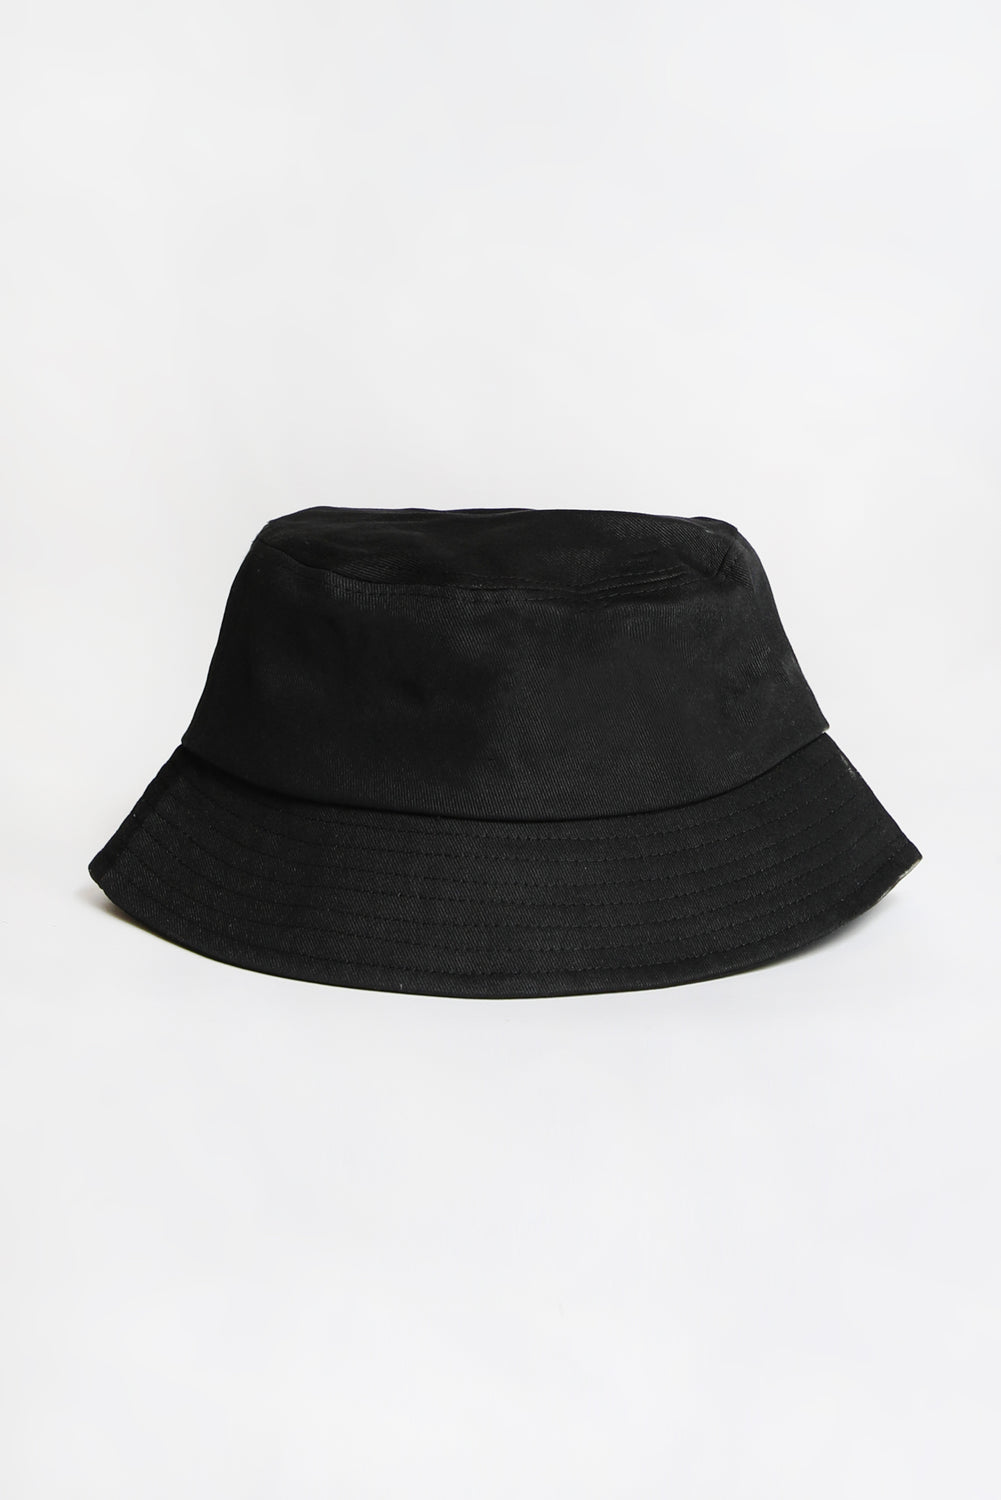 Zoo York Unisex Large Text Bucket Hat Black